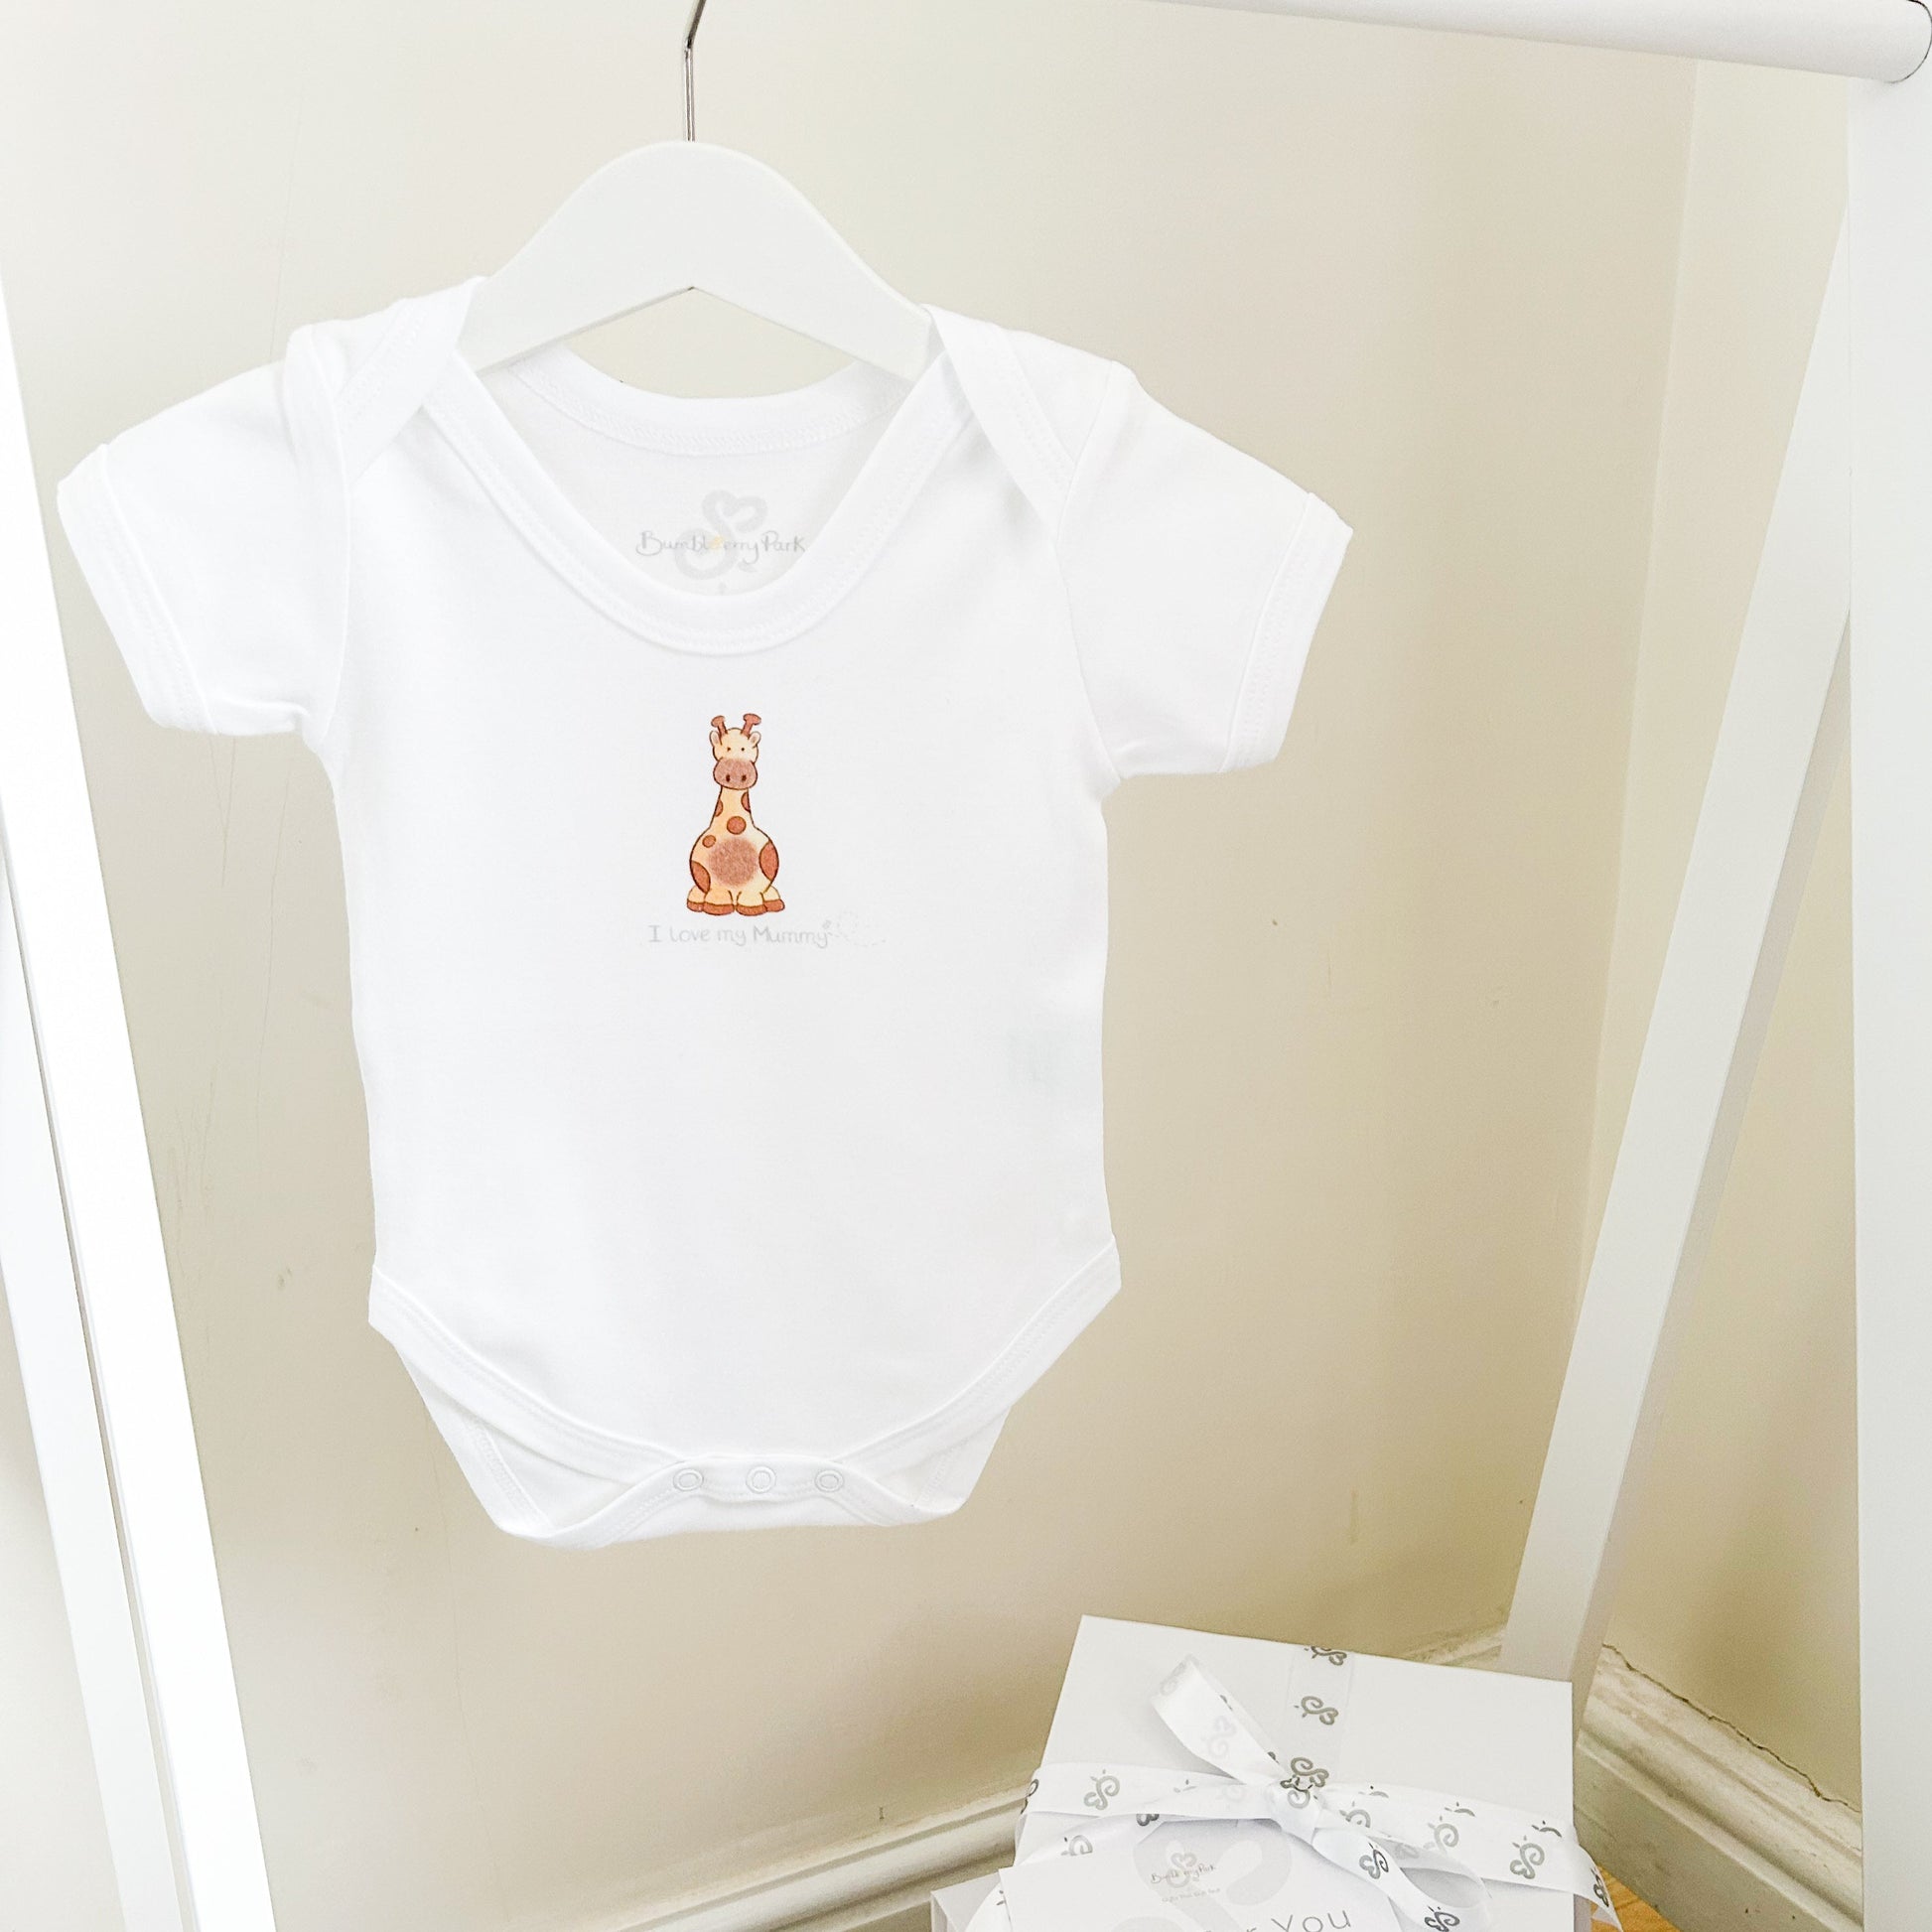 white baby bodysuit with safari giraffe design and I love my mummy print with a luxury white gift box and ribbon